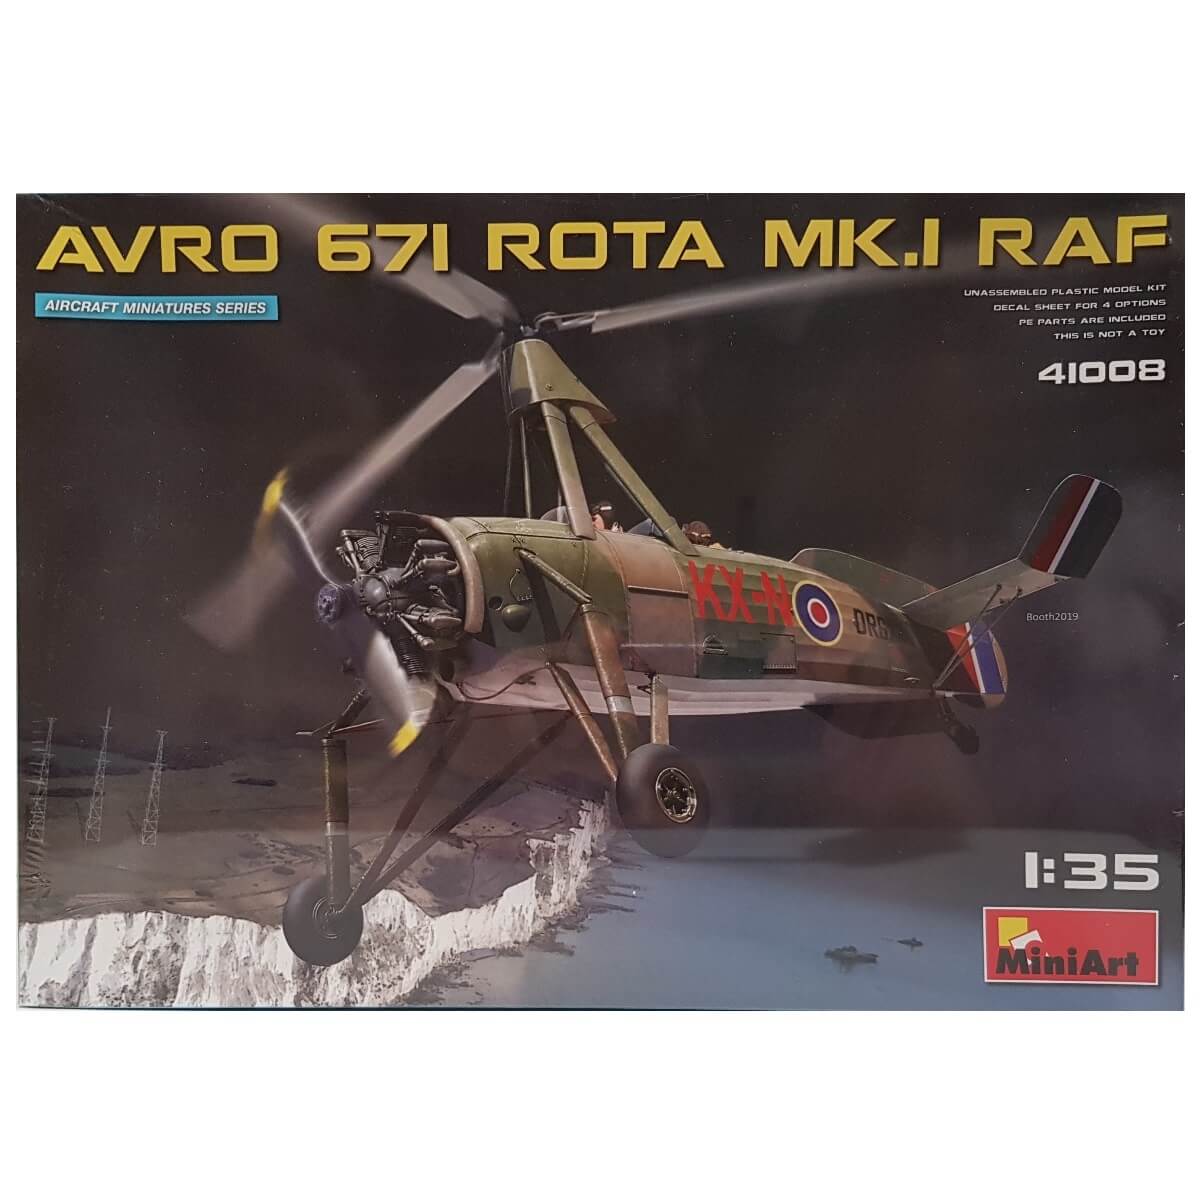 1:35 Avro 671 Rota Mk.I RAF - MINIART